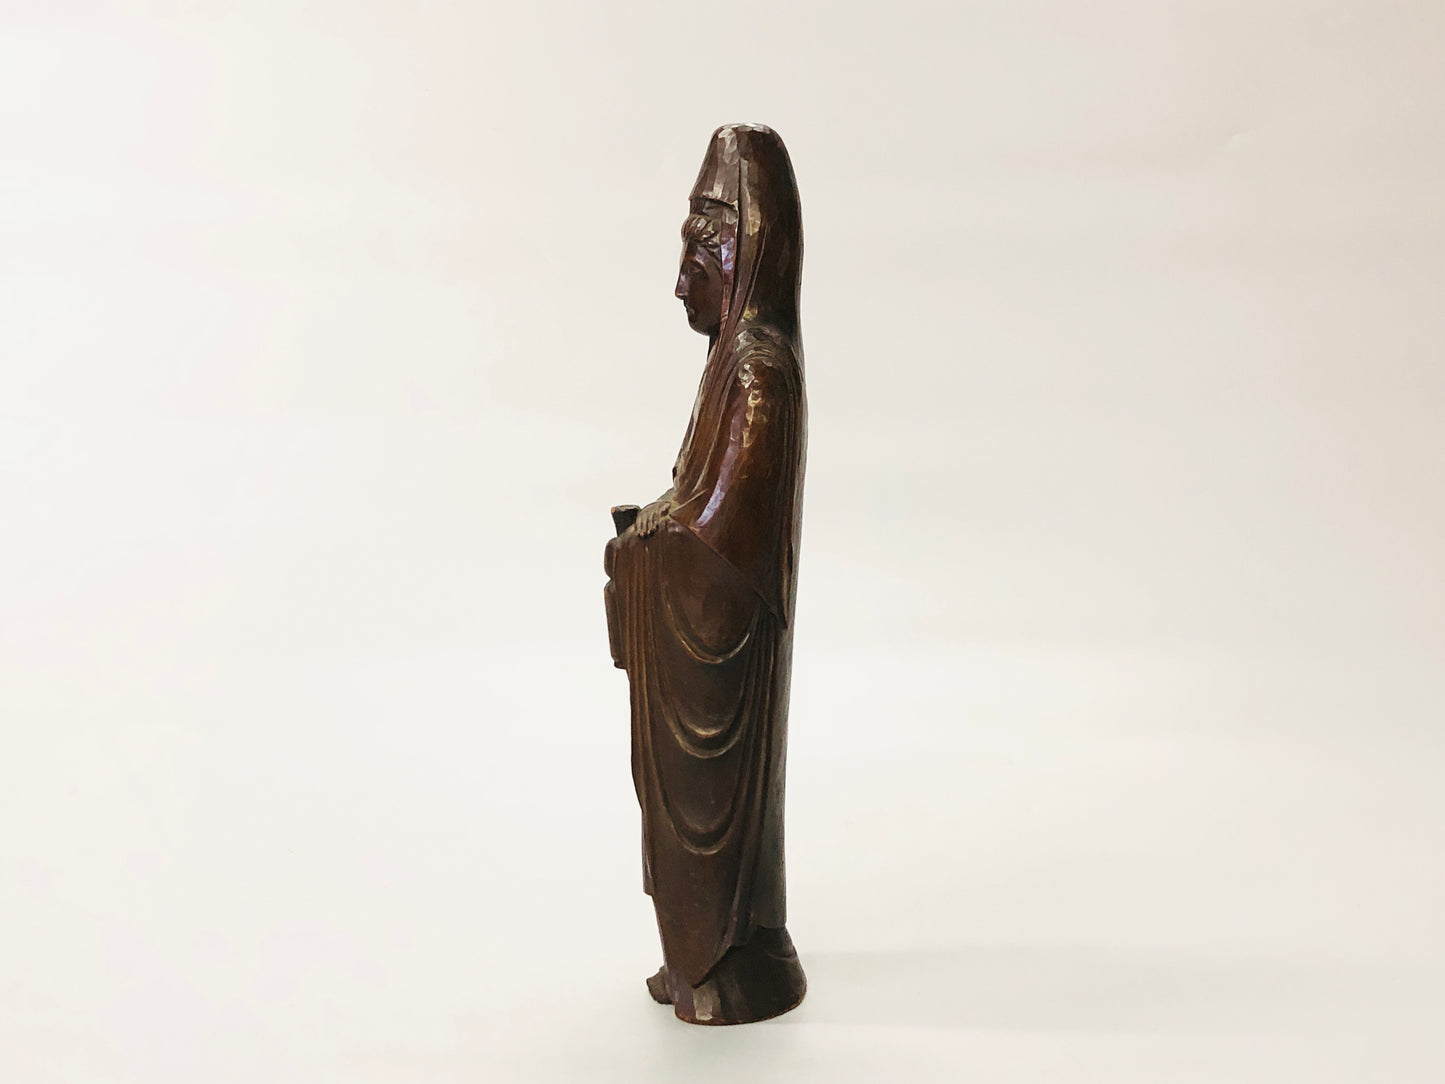 Y5269 STATUE wood carving Buddha figure figurine Japan vintage antique interior